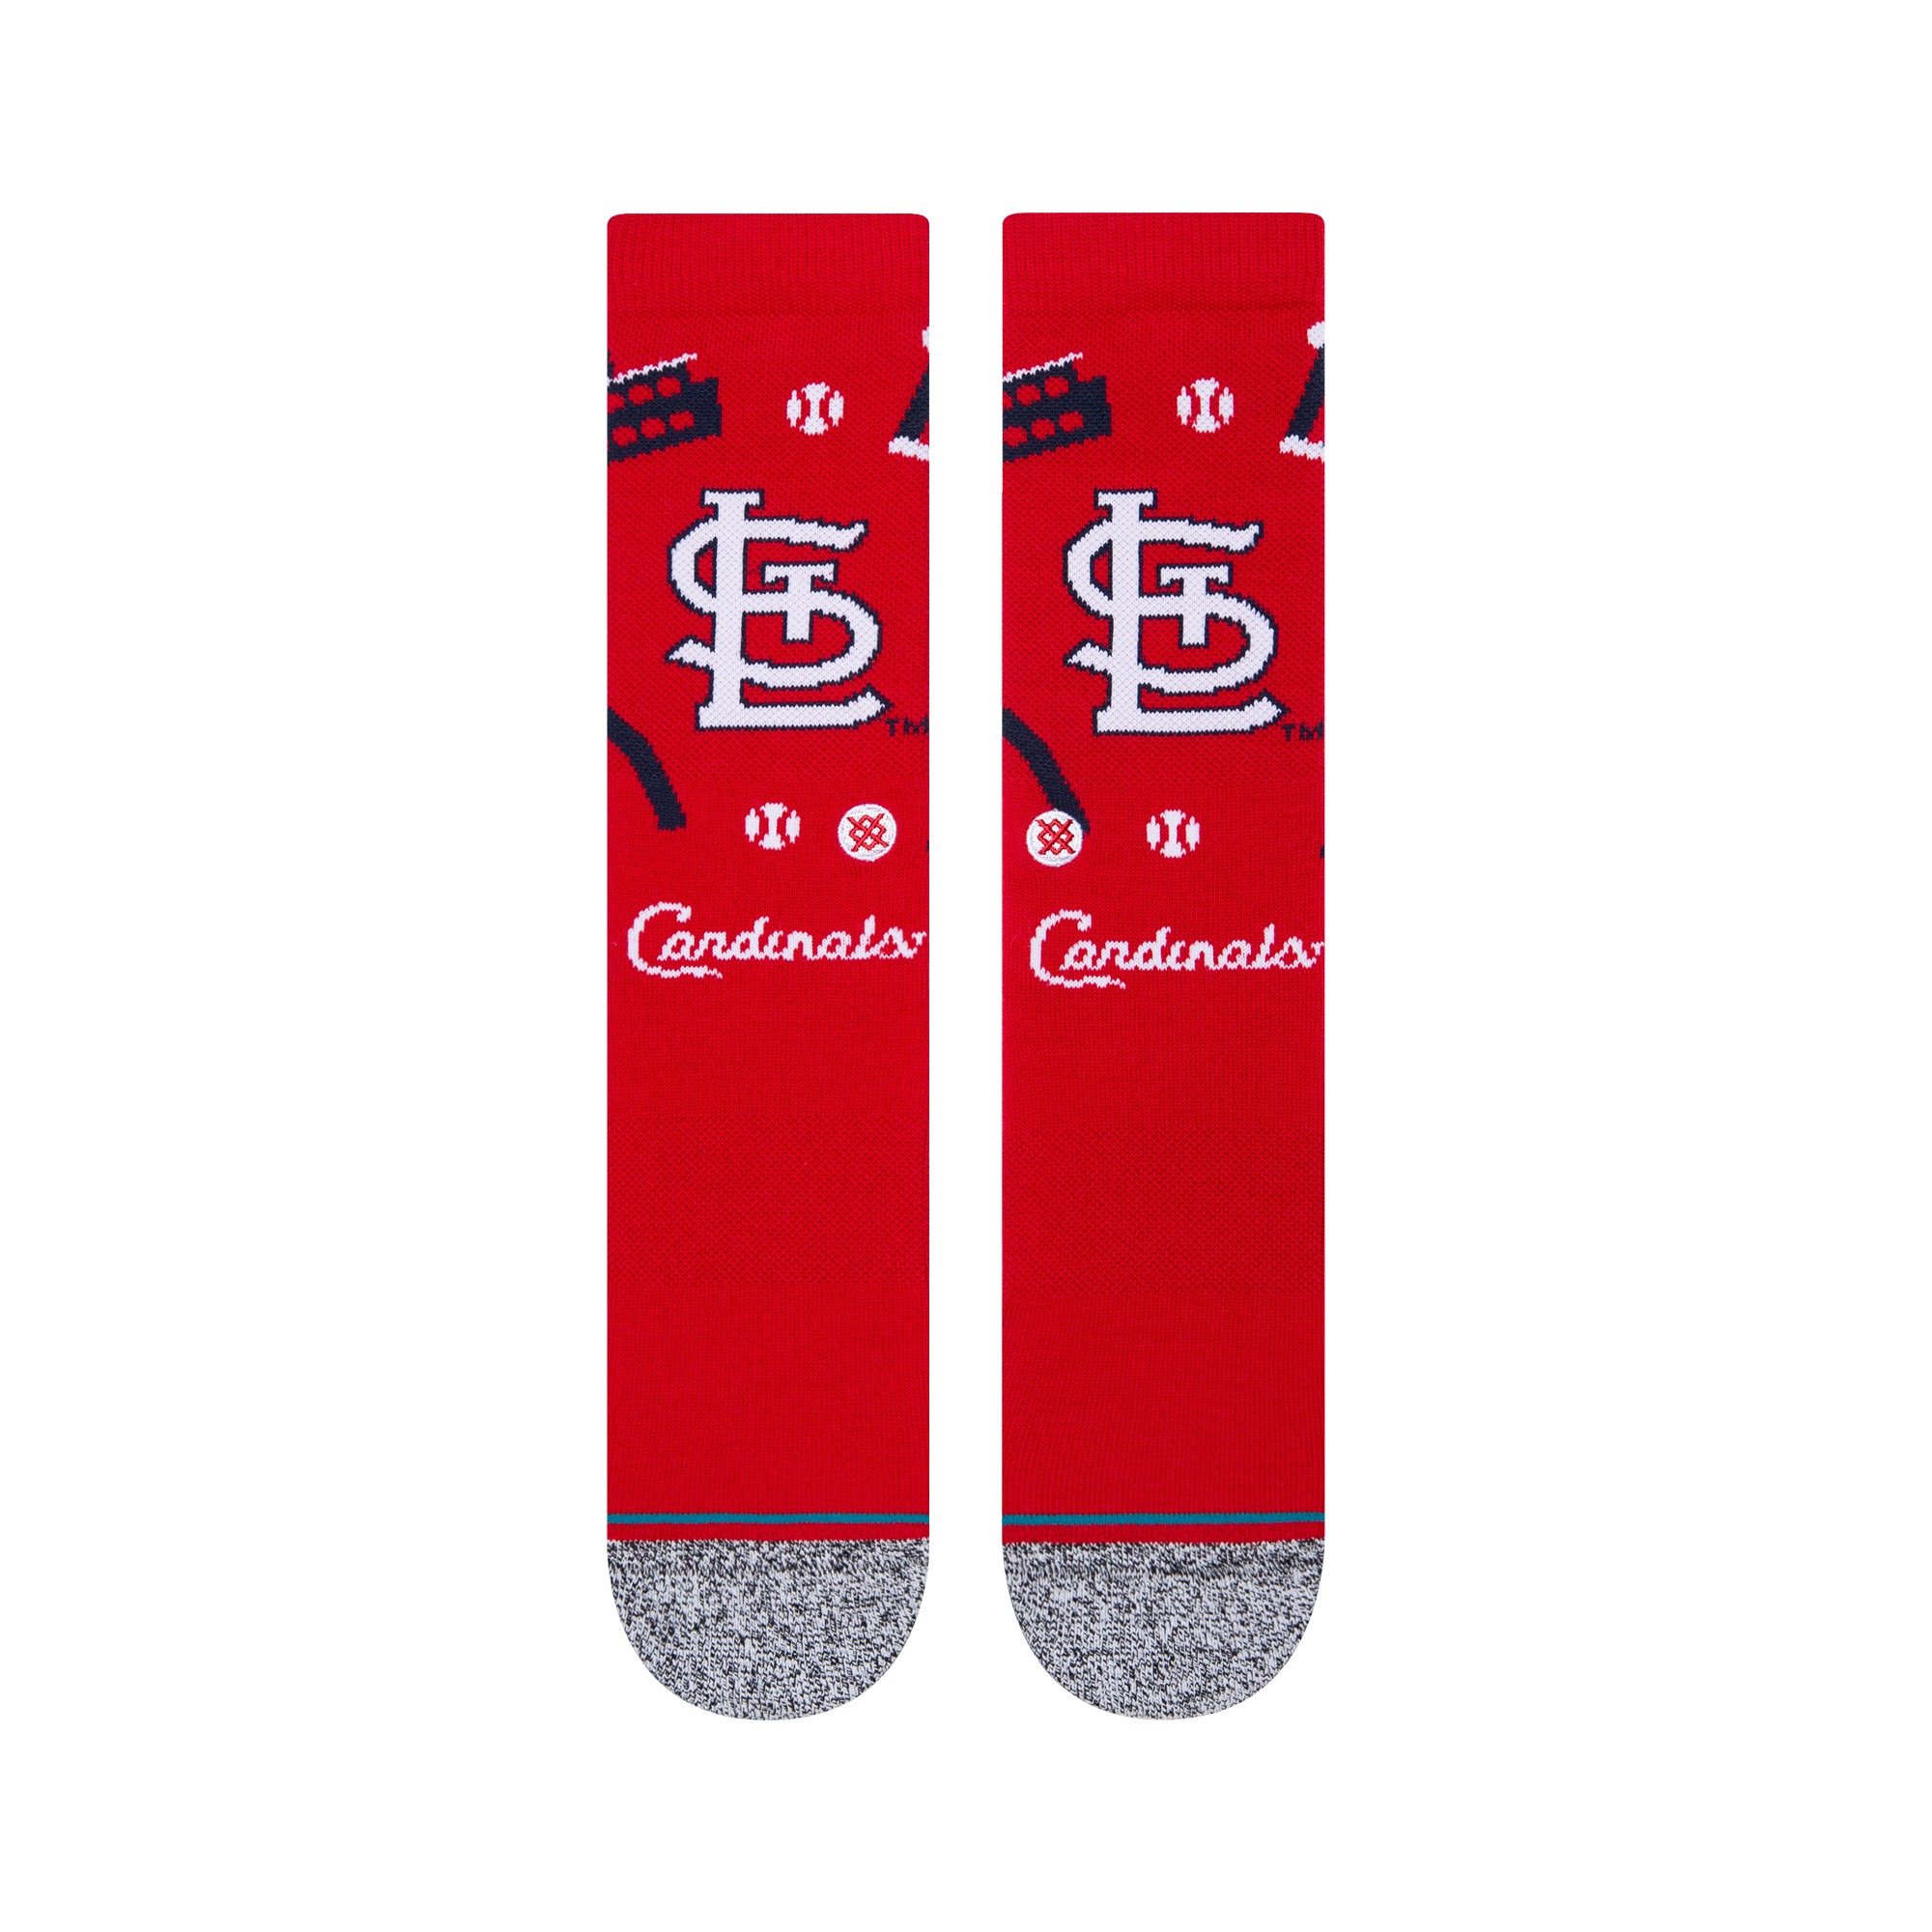 St. Louis Cardinals Socks